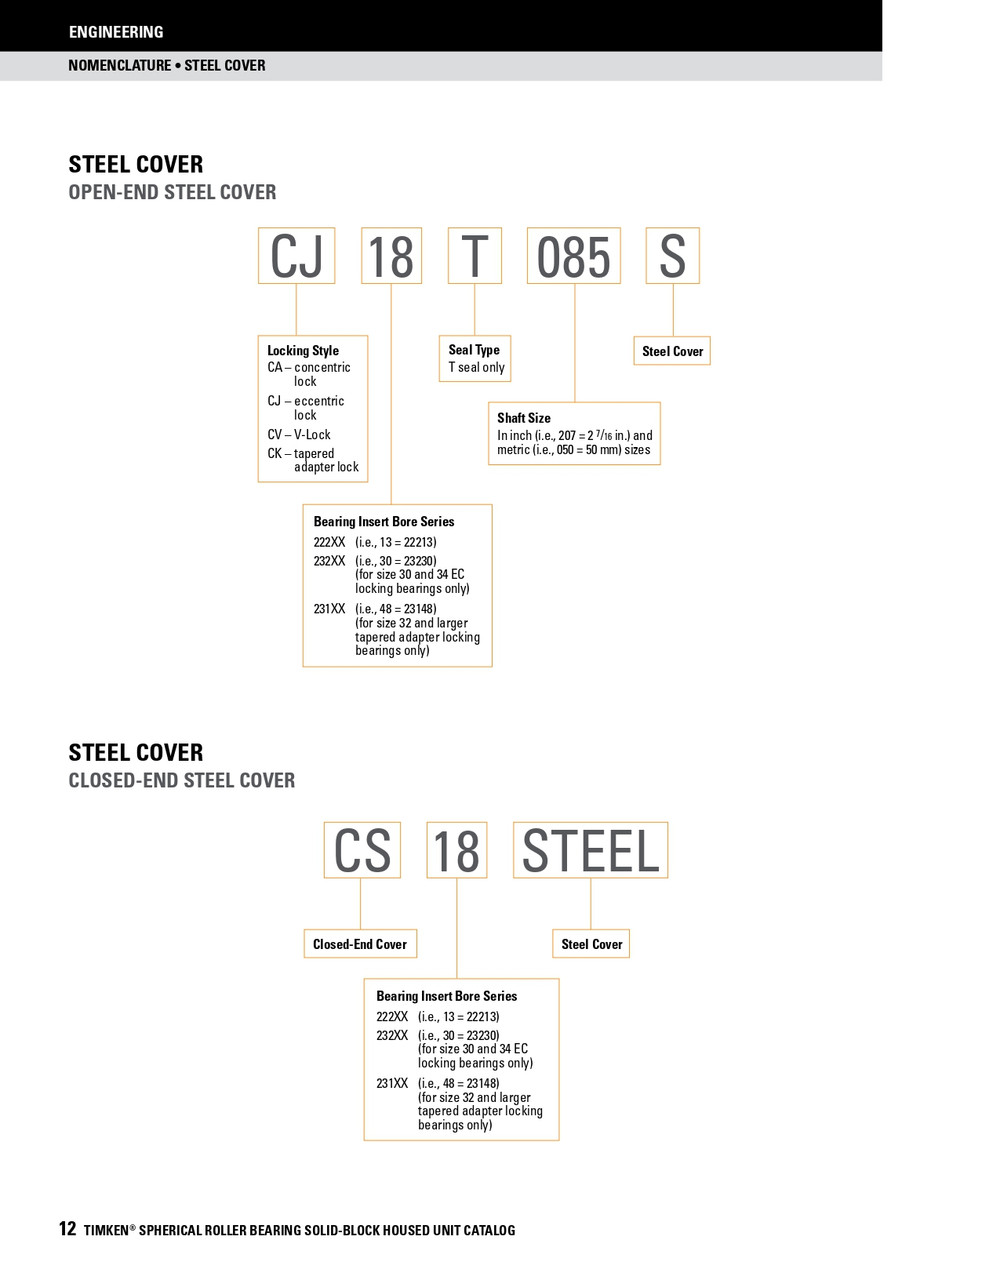 75mm Timken SRB Steel Open End Cover w/Teflon Seal - QV V-Lock® Type   CV16T075S